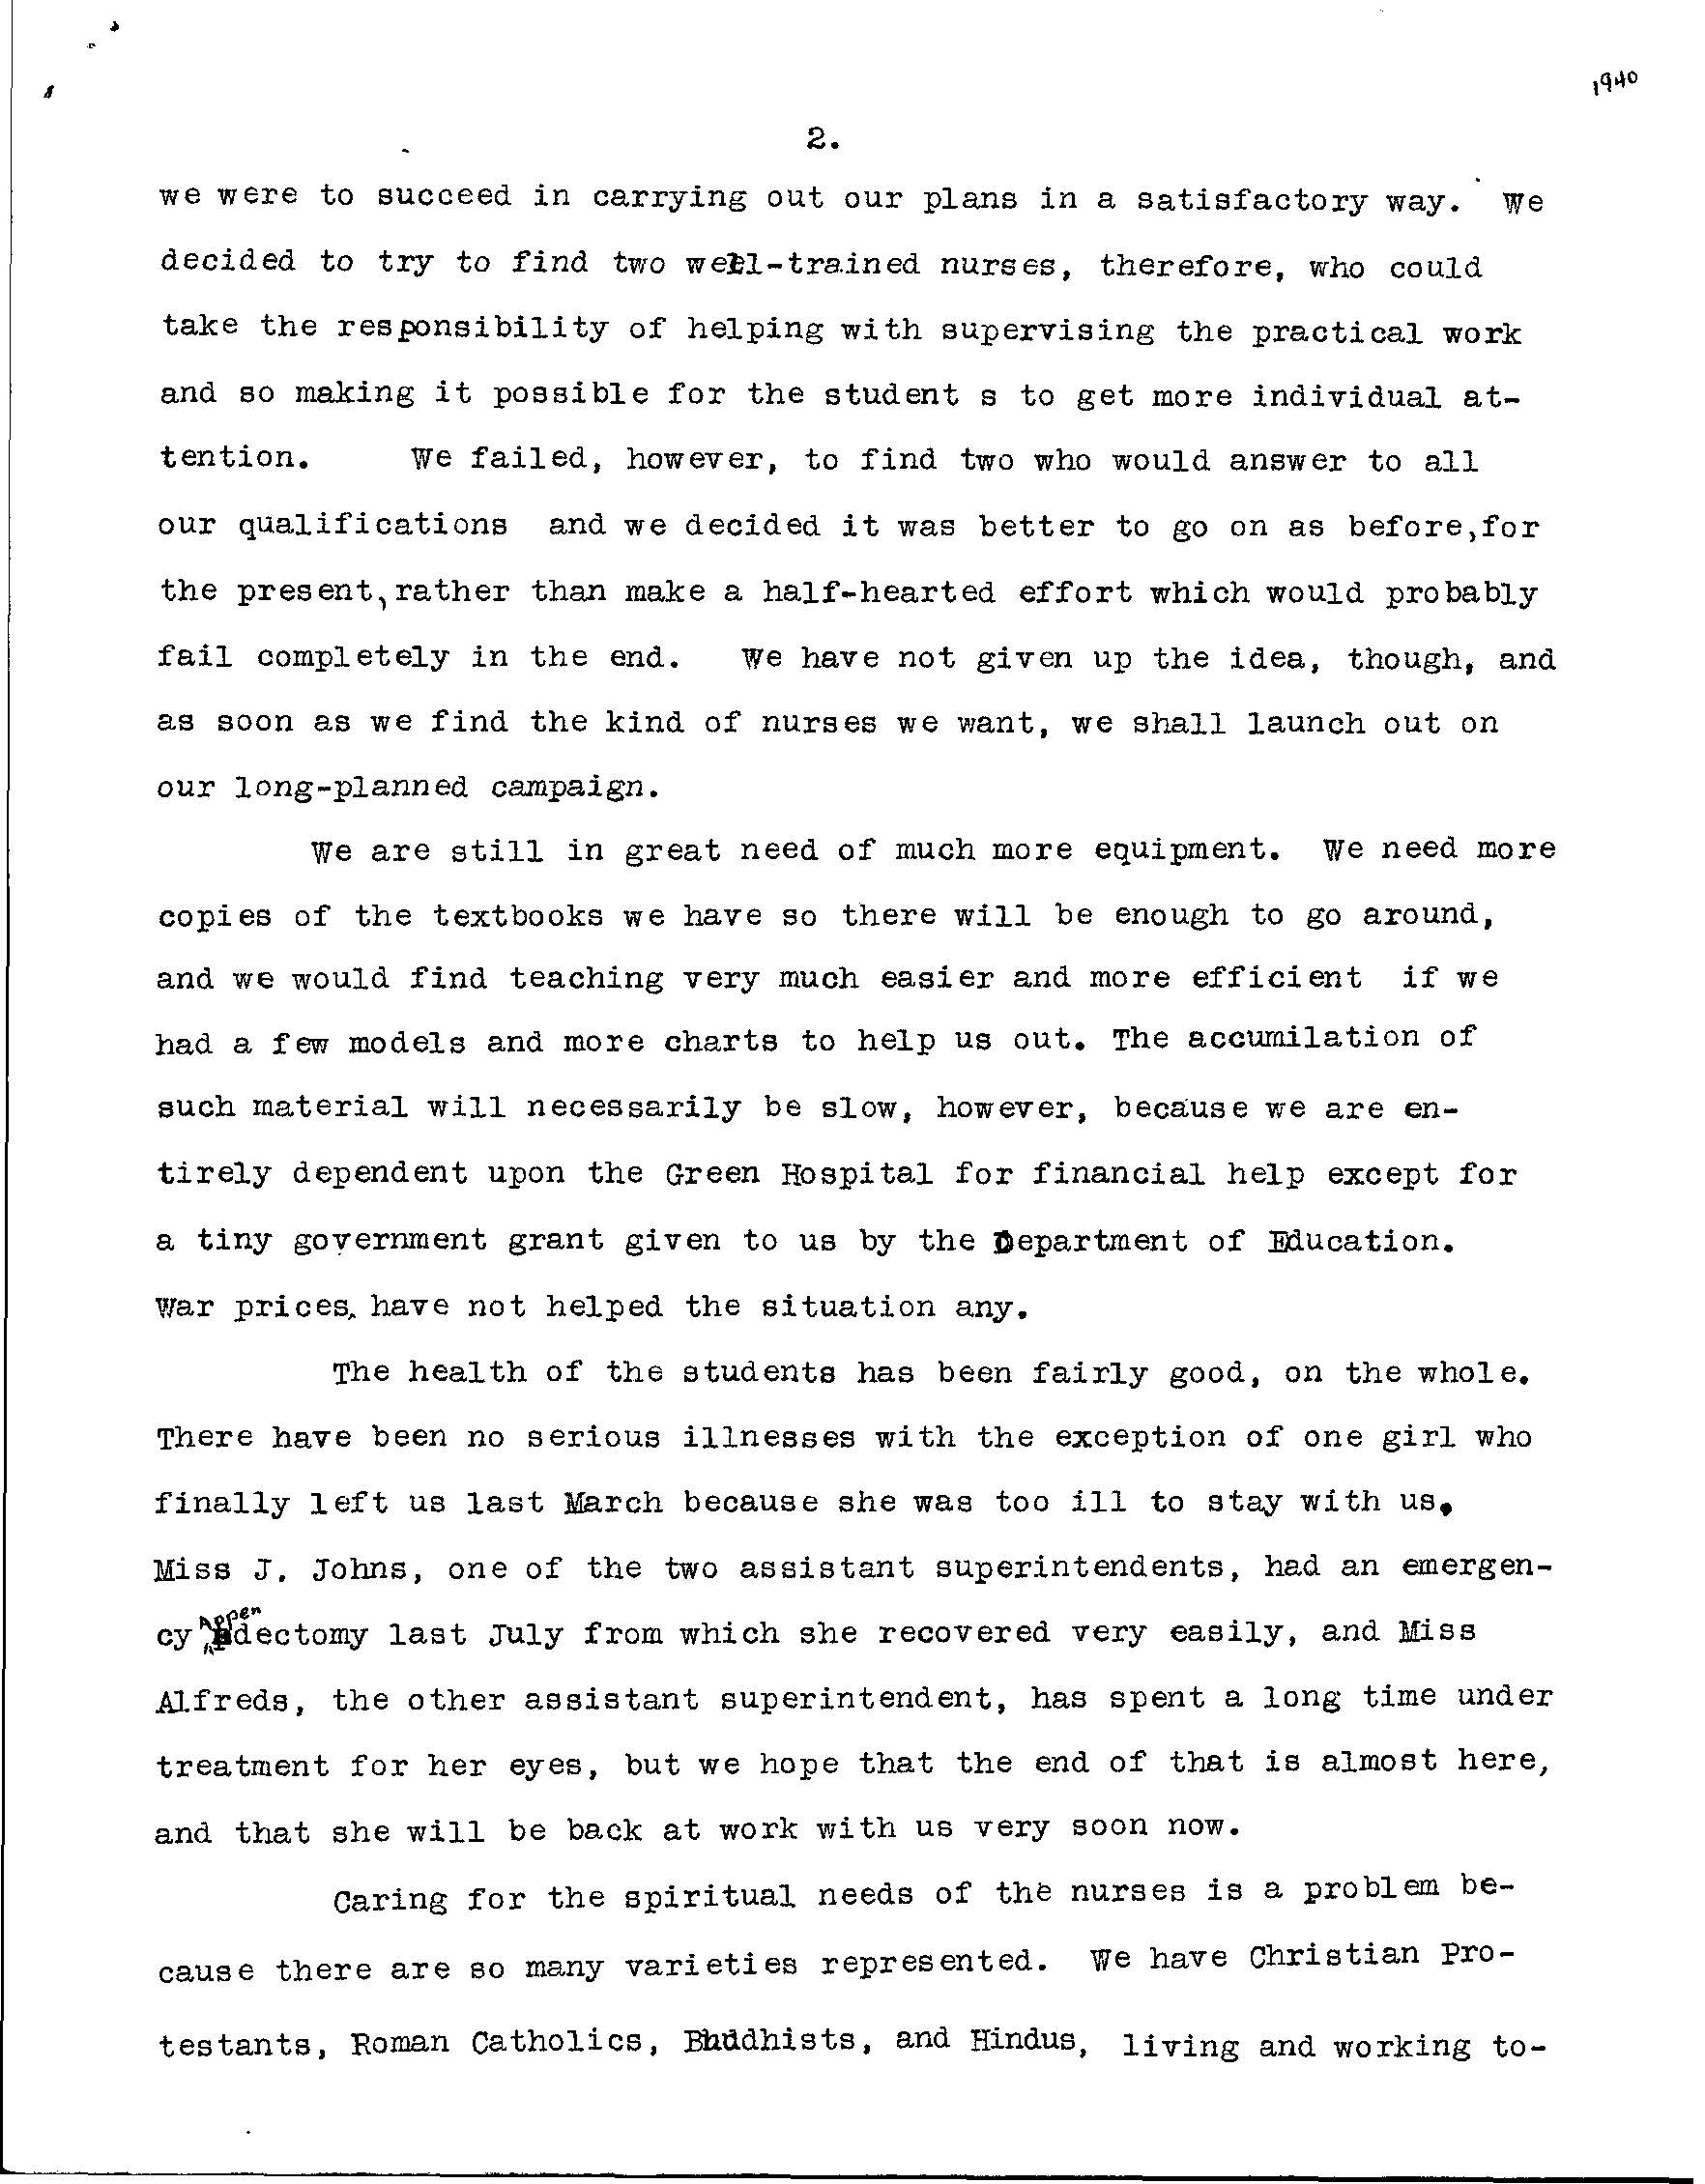 willis-pierce-school-of-nursing-annual-report-1940_page_3